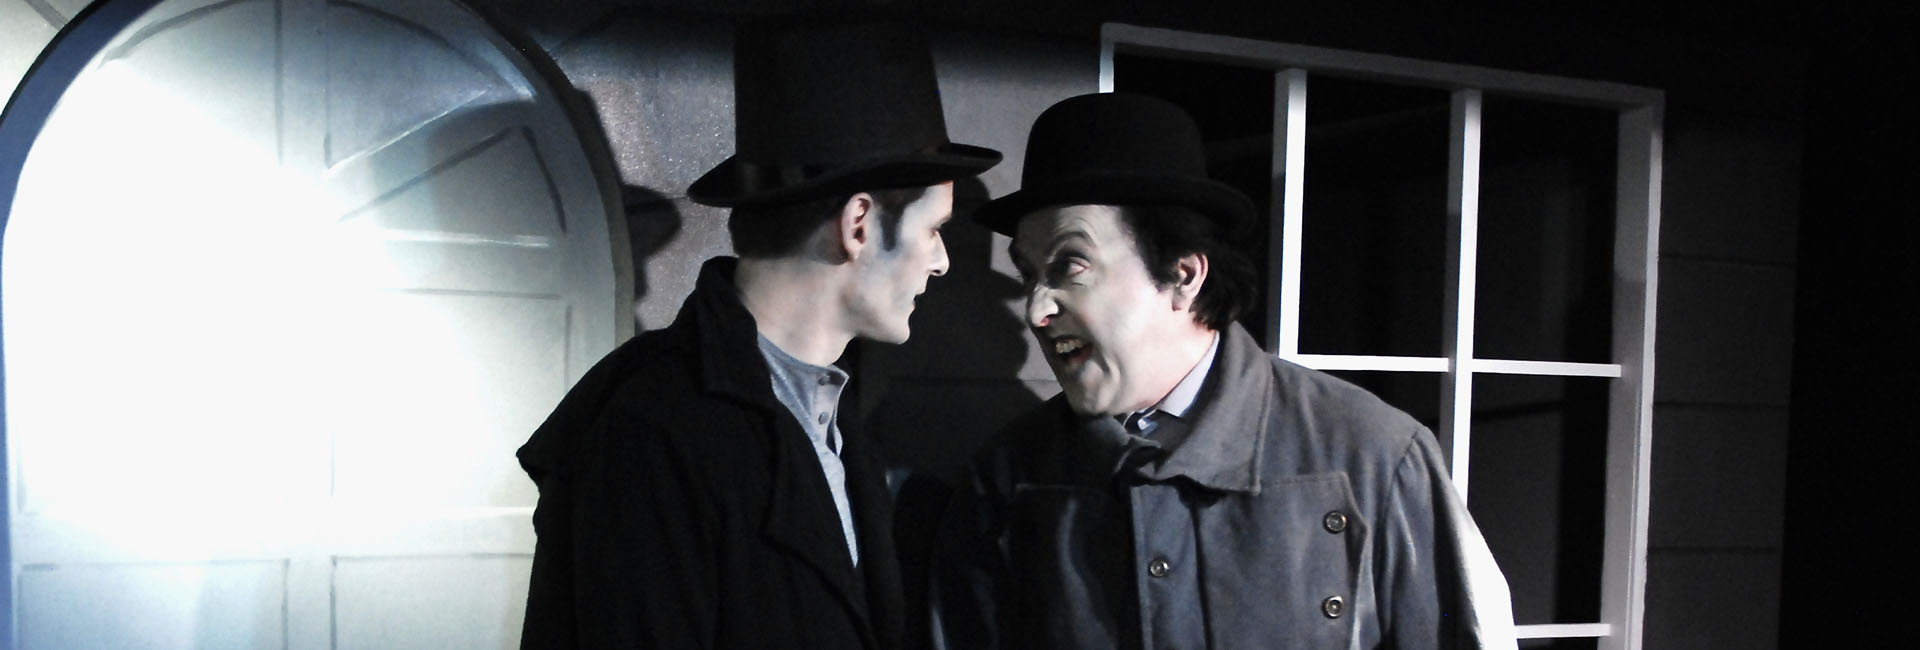 Szene aus "Neue Fälle für Sherlock Holmes"